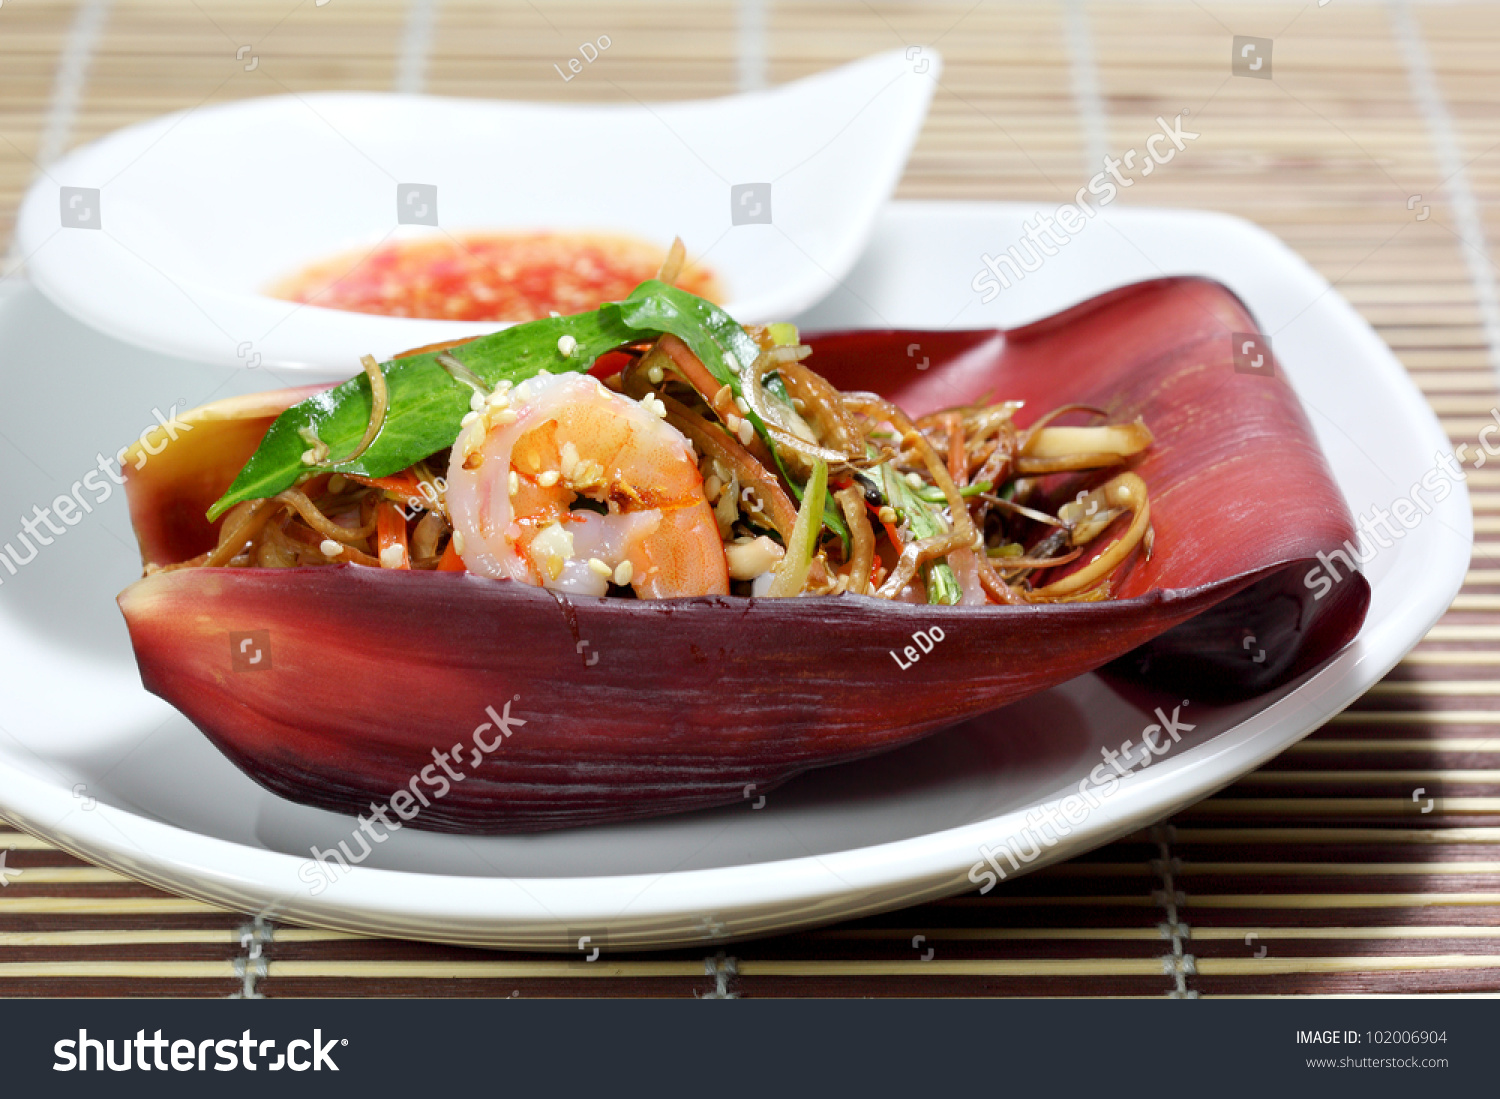 Banana Flower Salad Vietnamese Cuisine Stock Photo Edit Now 102006904,Easy Chicken Crock Pot Recipes Healthy